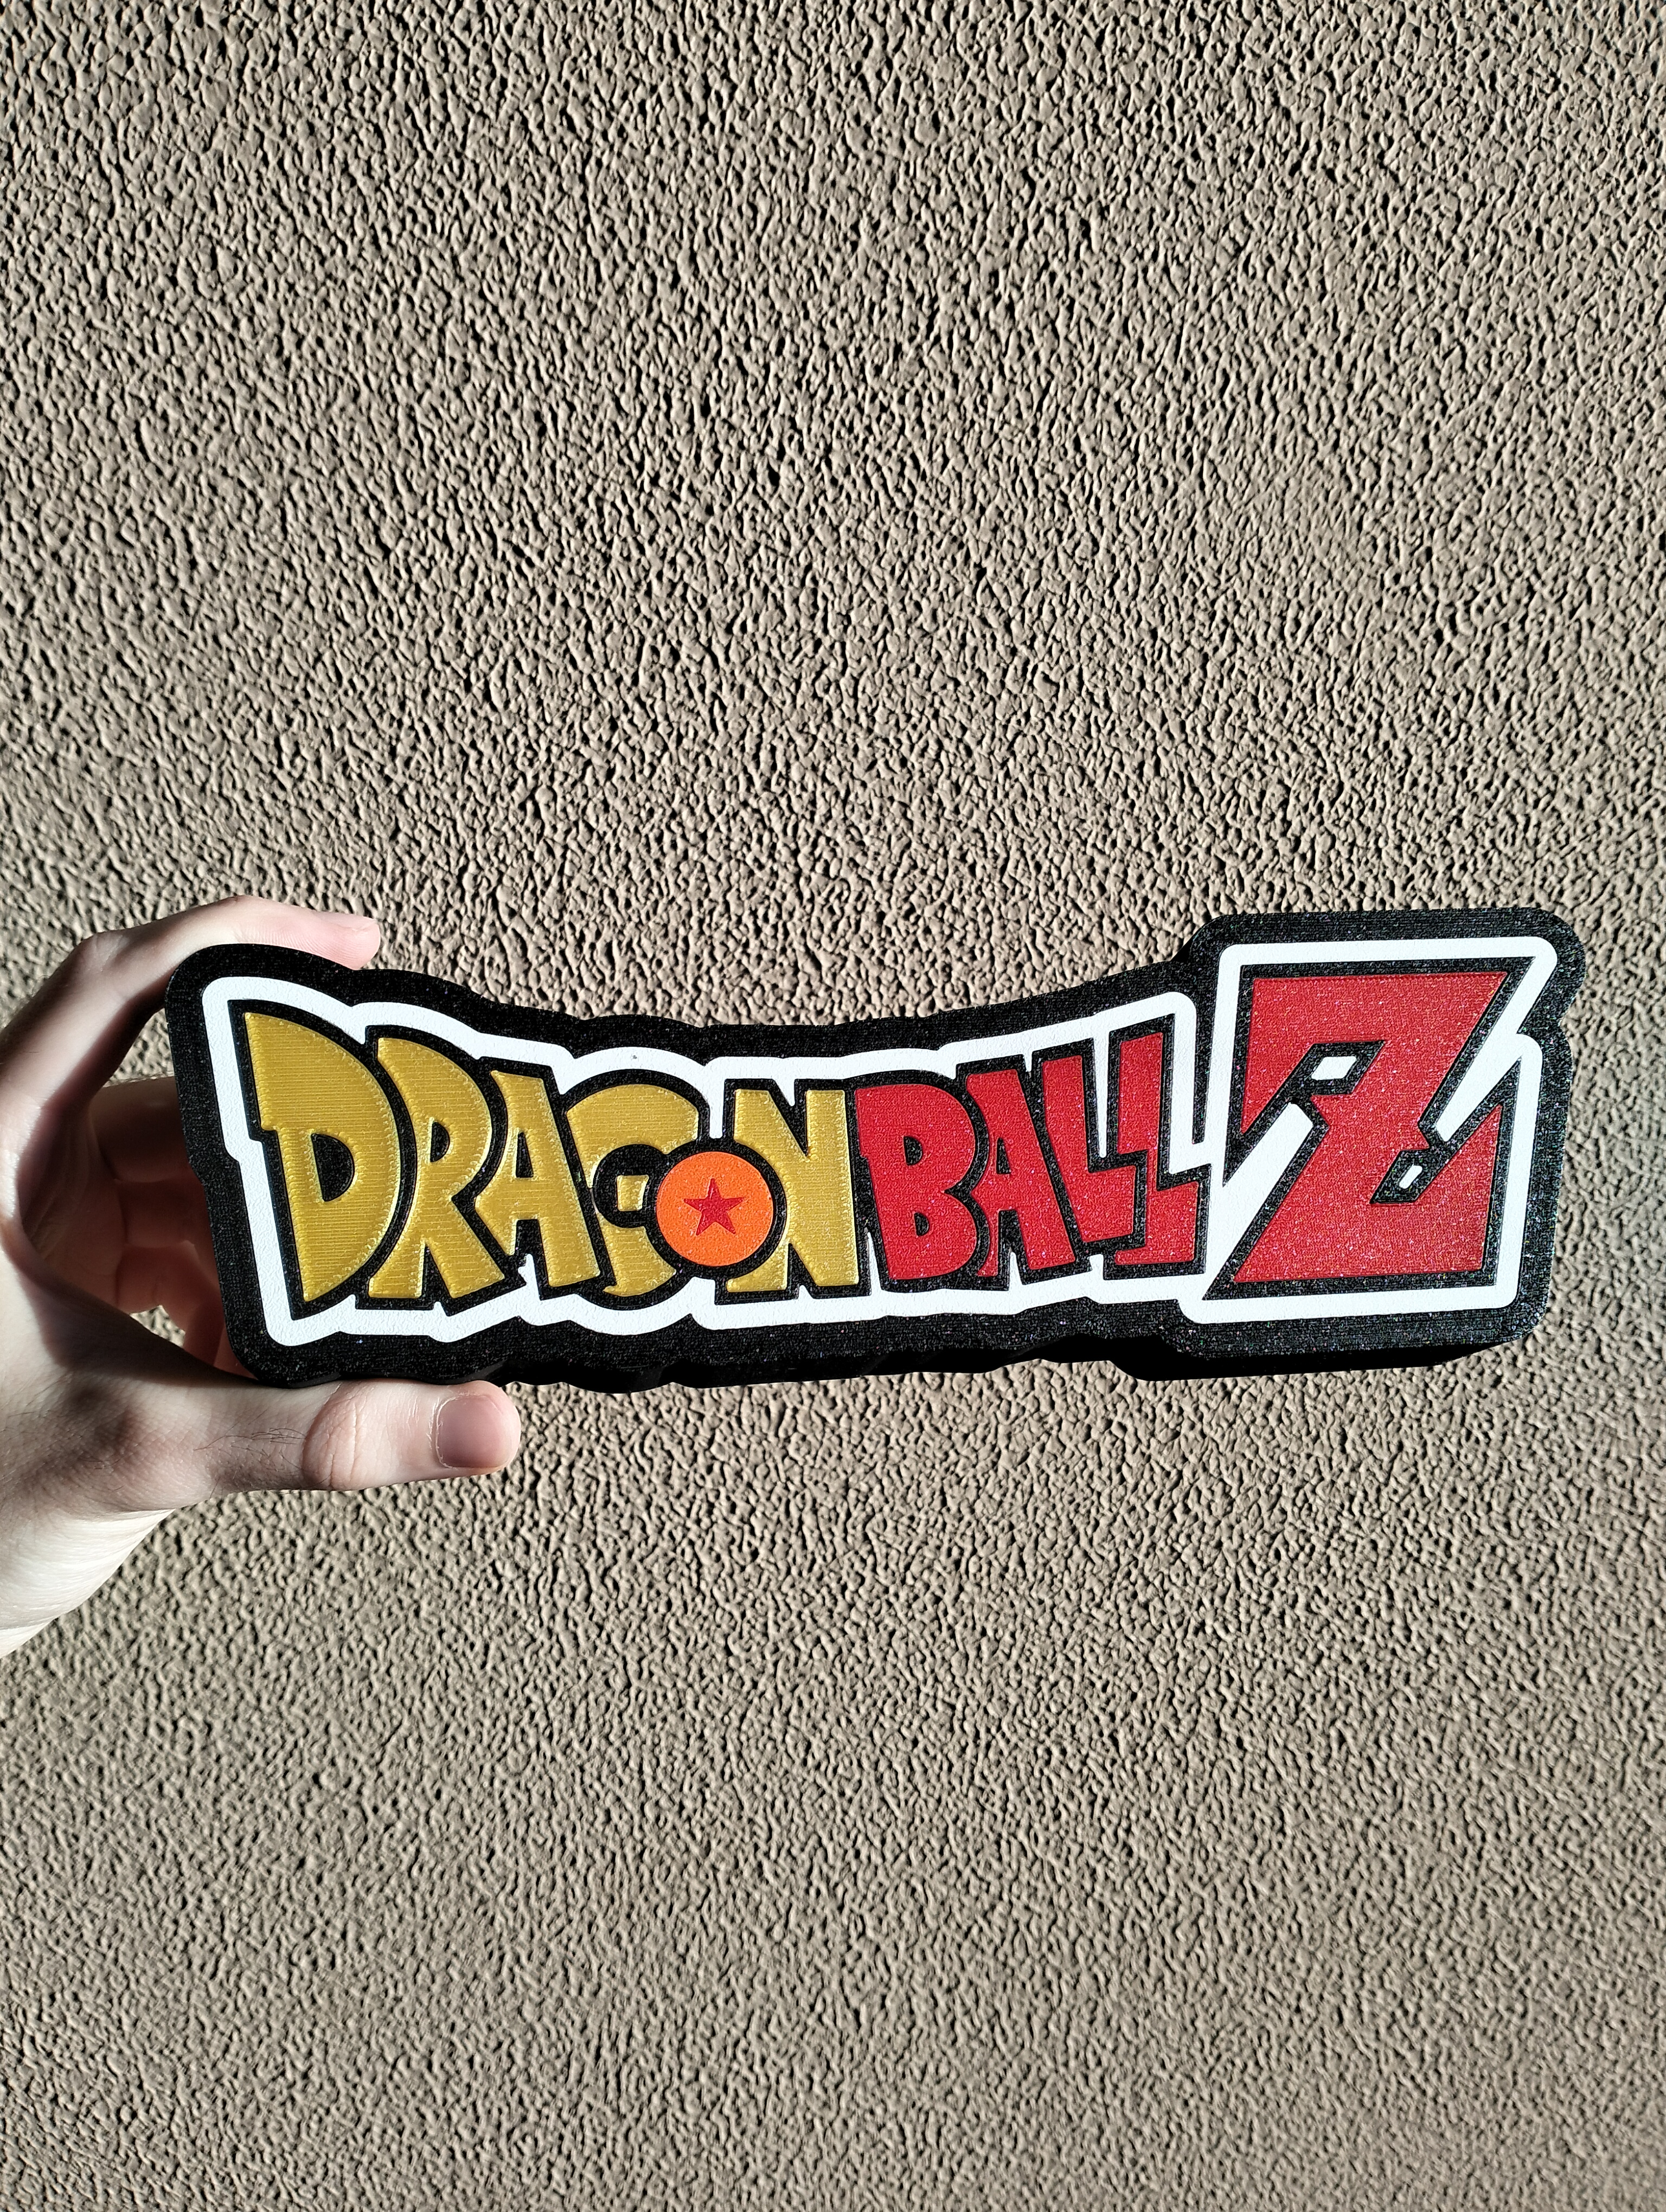 Dragon ball z logo' Sticker